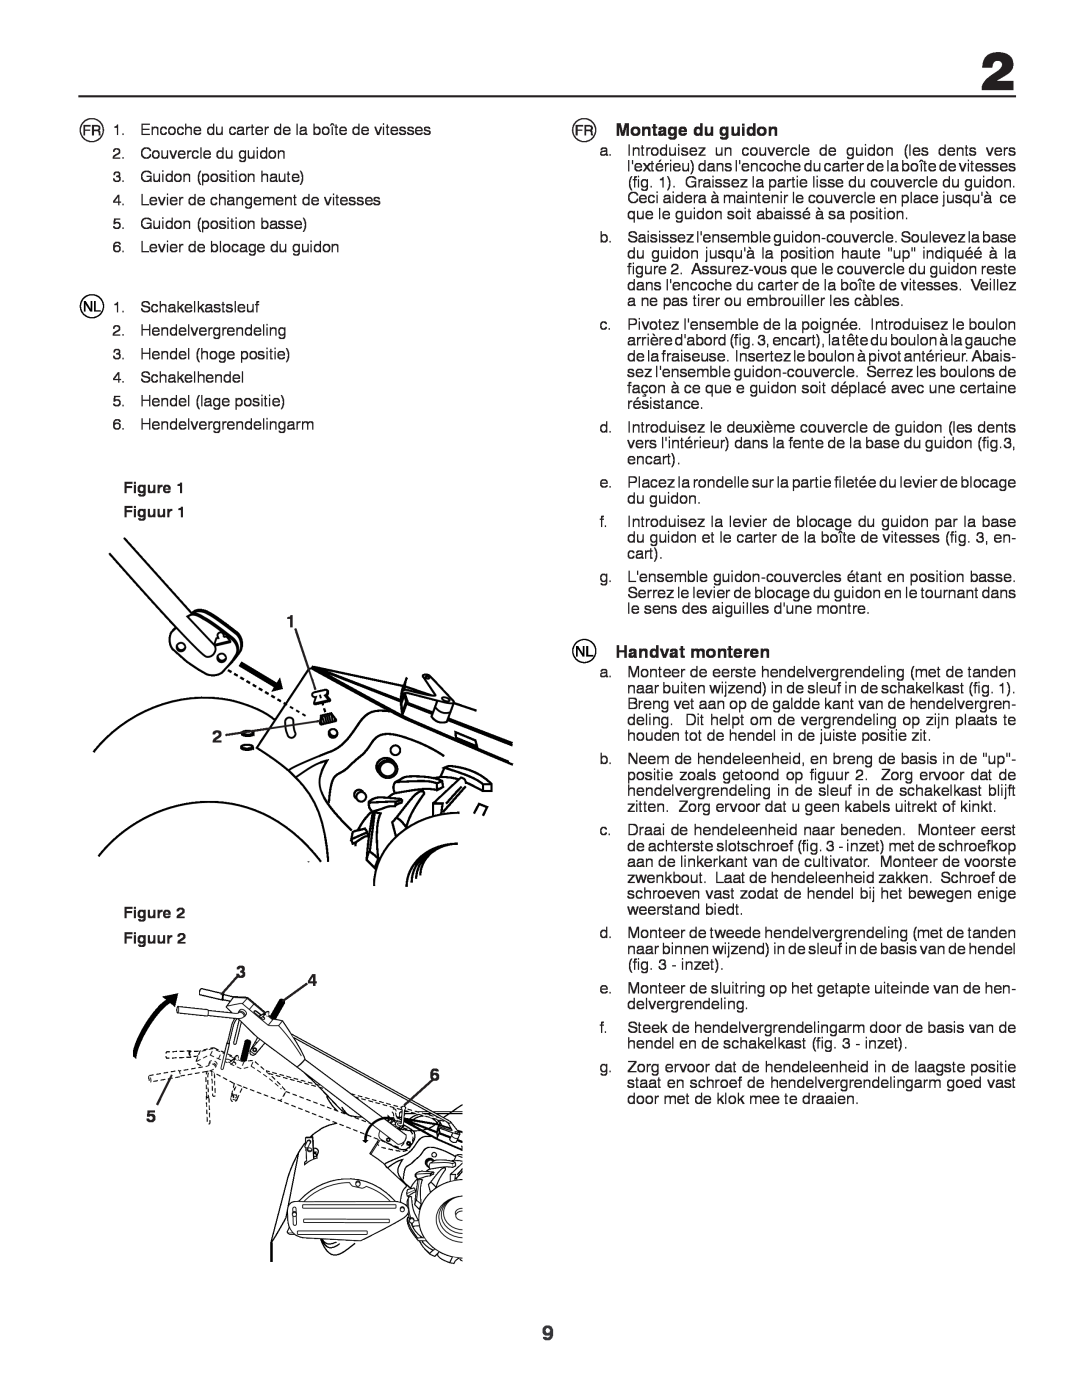 Husqvarna CRT81 instruction manual Montage du guidon, Handvat monteren, Figuur 